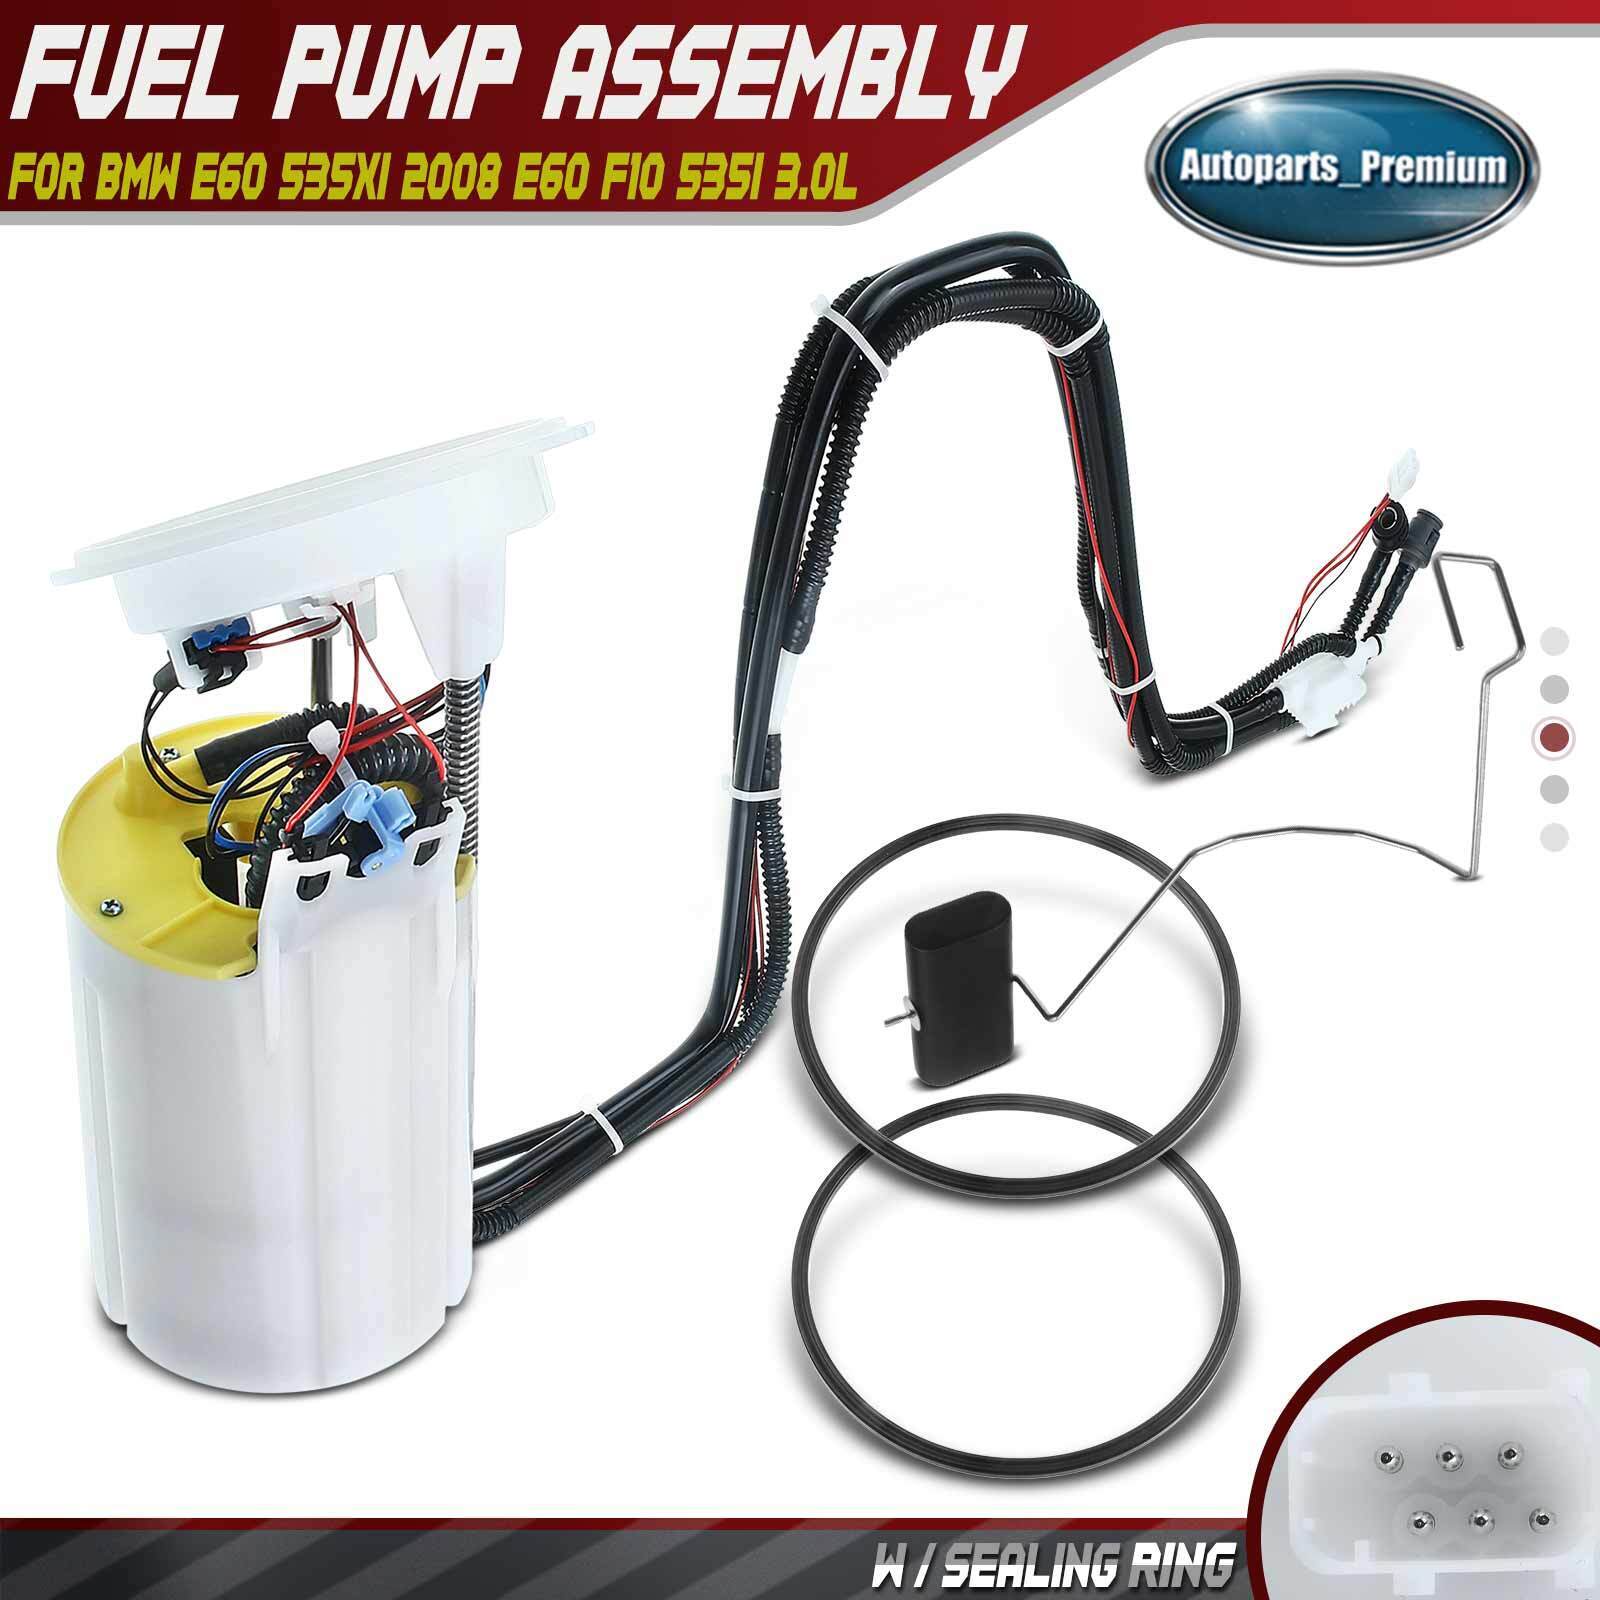 Fuel Pump Assembly for BMW E60 535xi 2008 E60 F10 535i 535i xDrive 3.0L Petrol